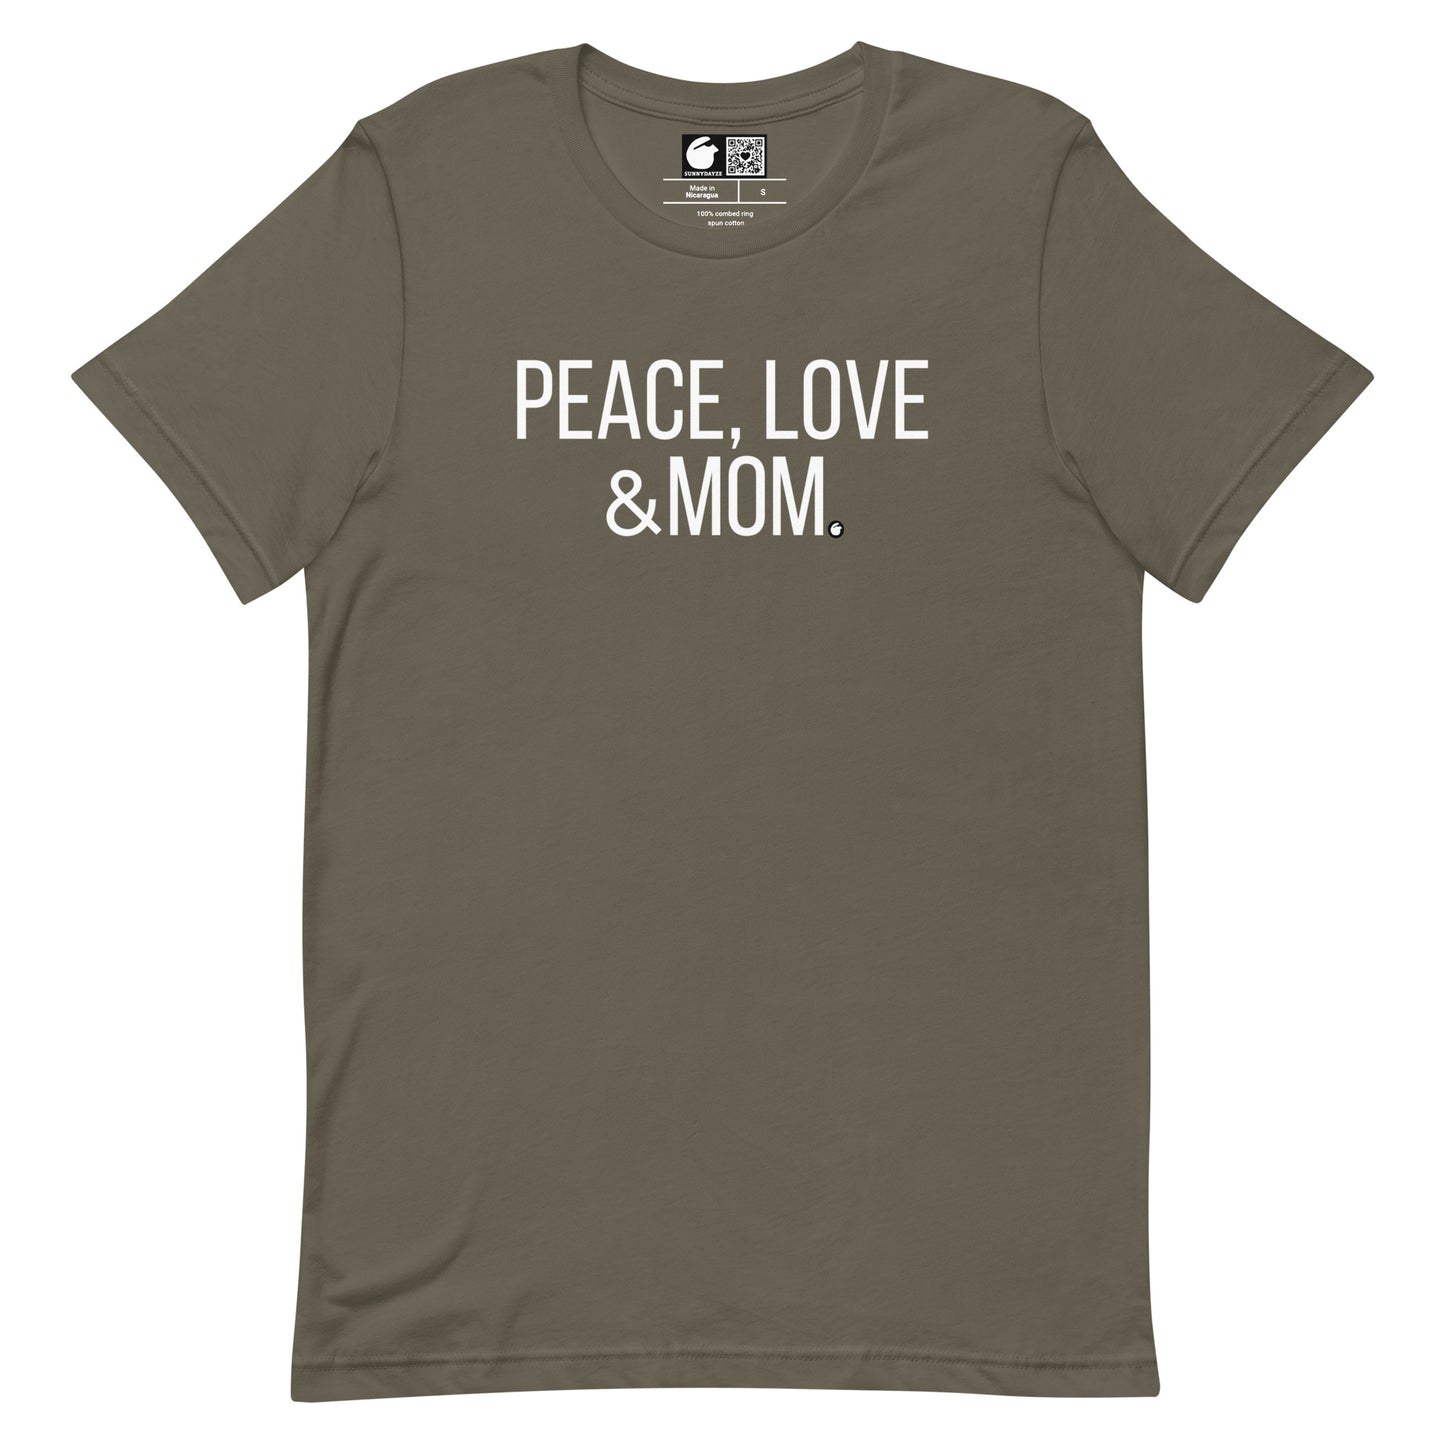 MOM Short-Sleeve Unisex t-shirt